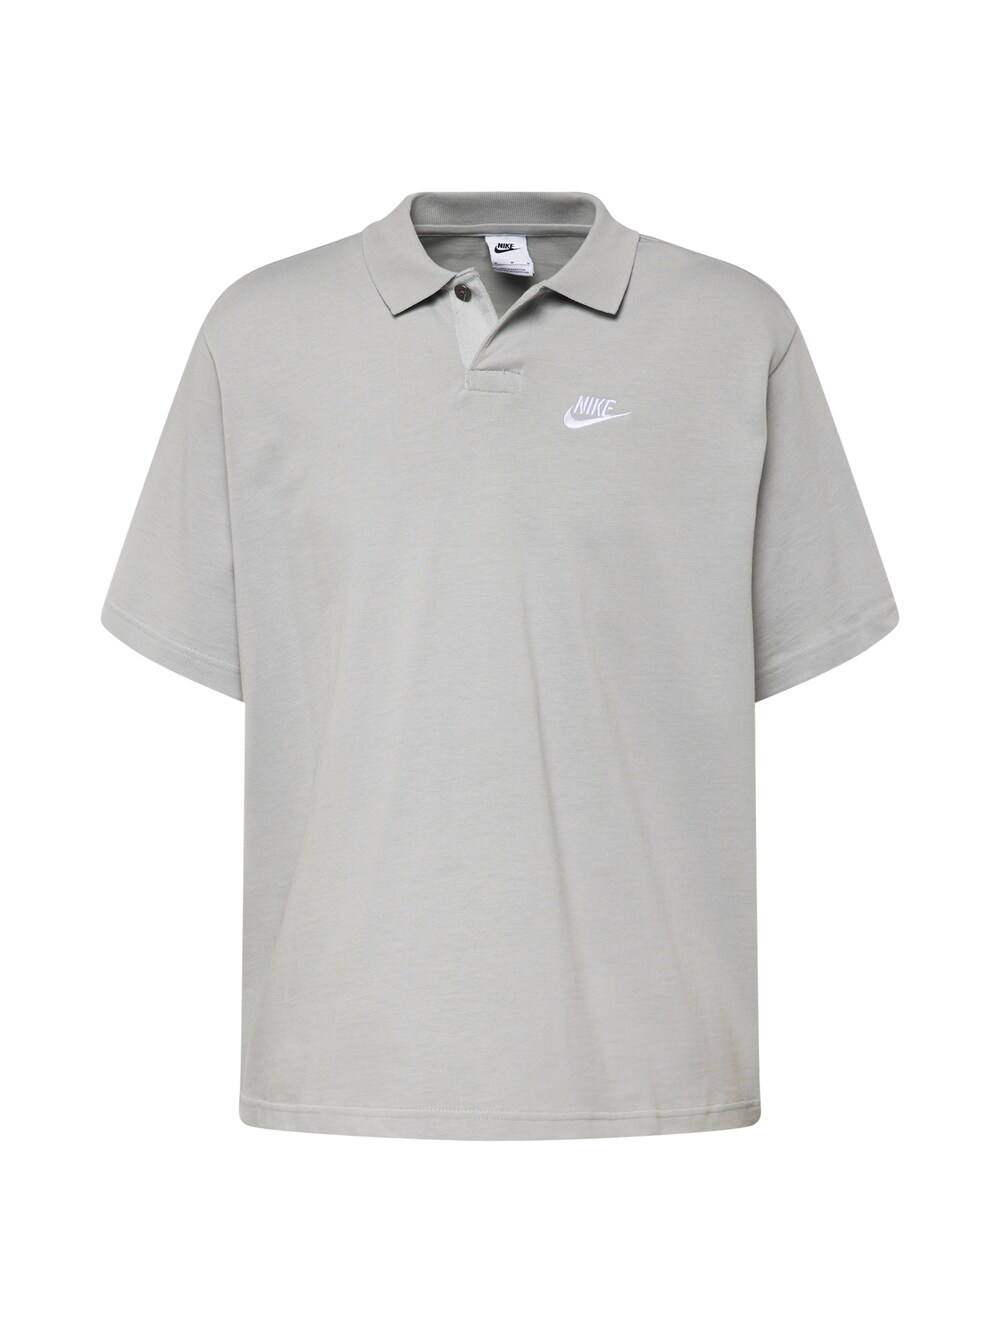 Футболка Nike Sportswear, серый/светло-серый пуховик nike hooded серый светло серый